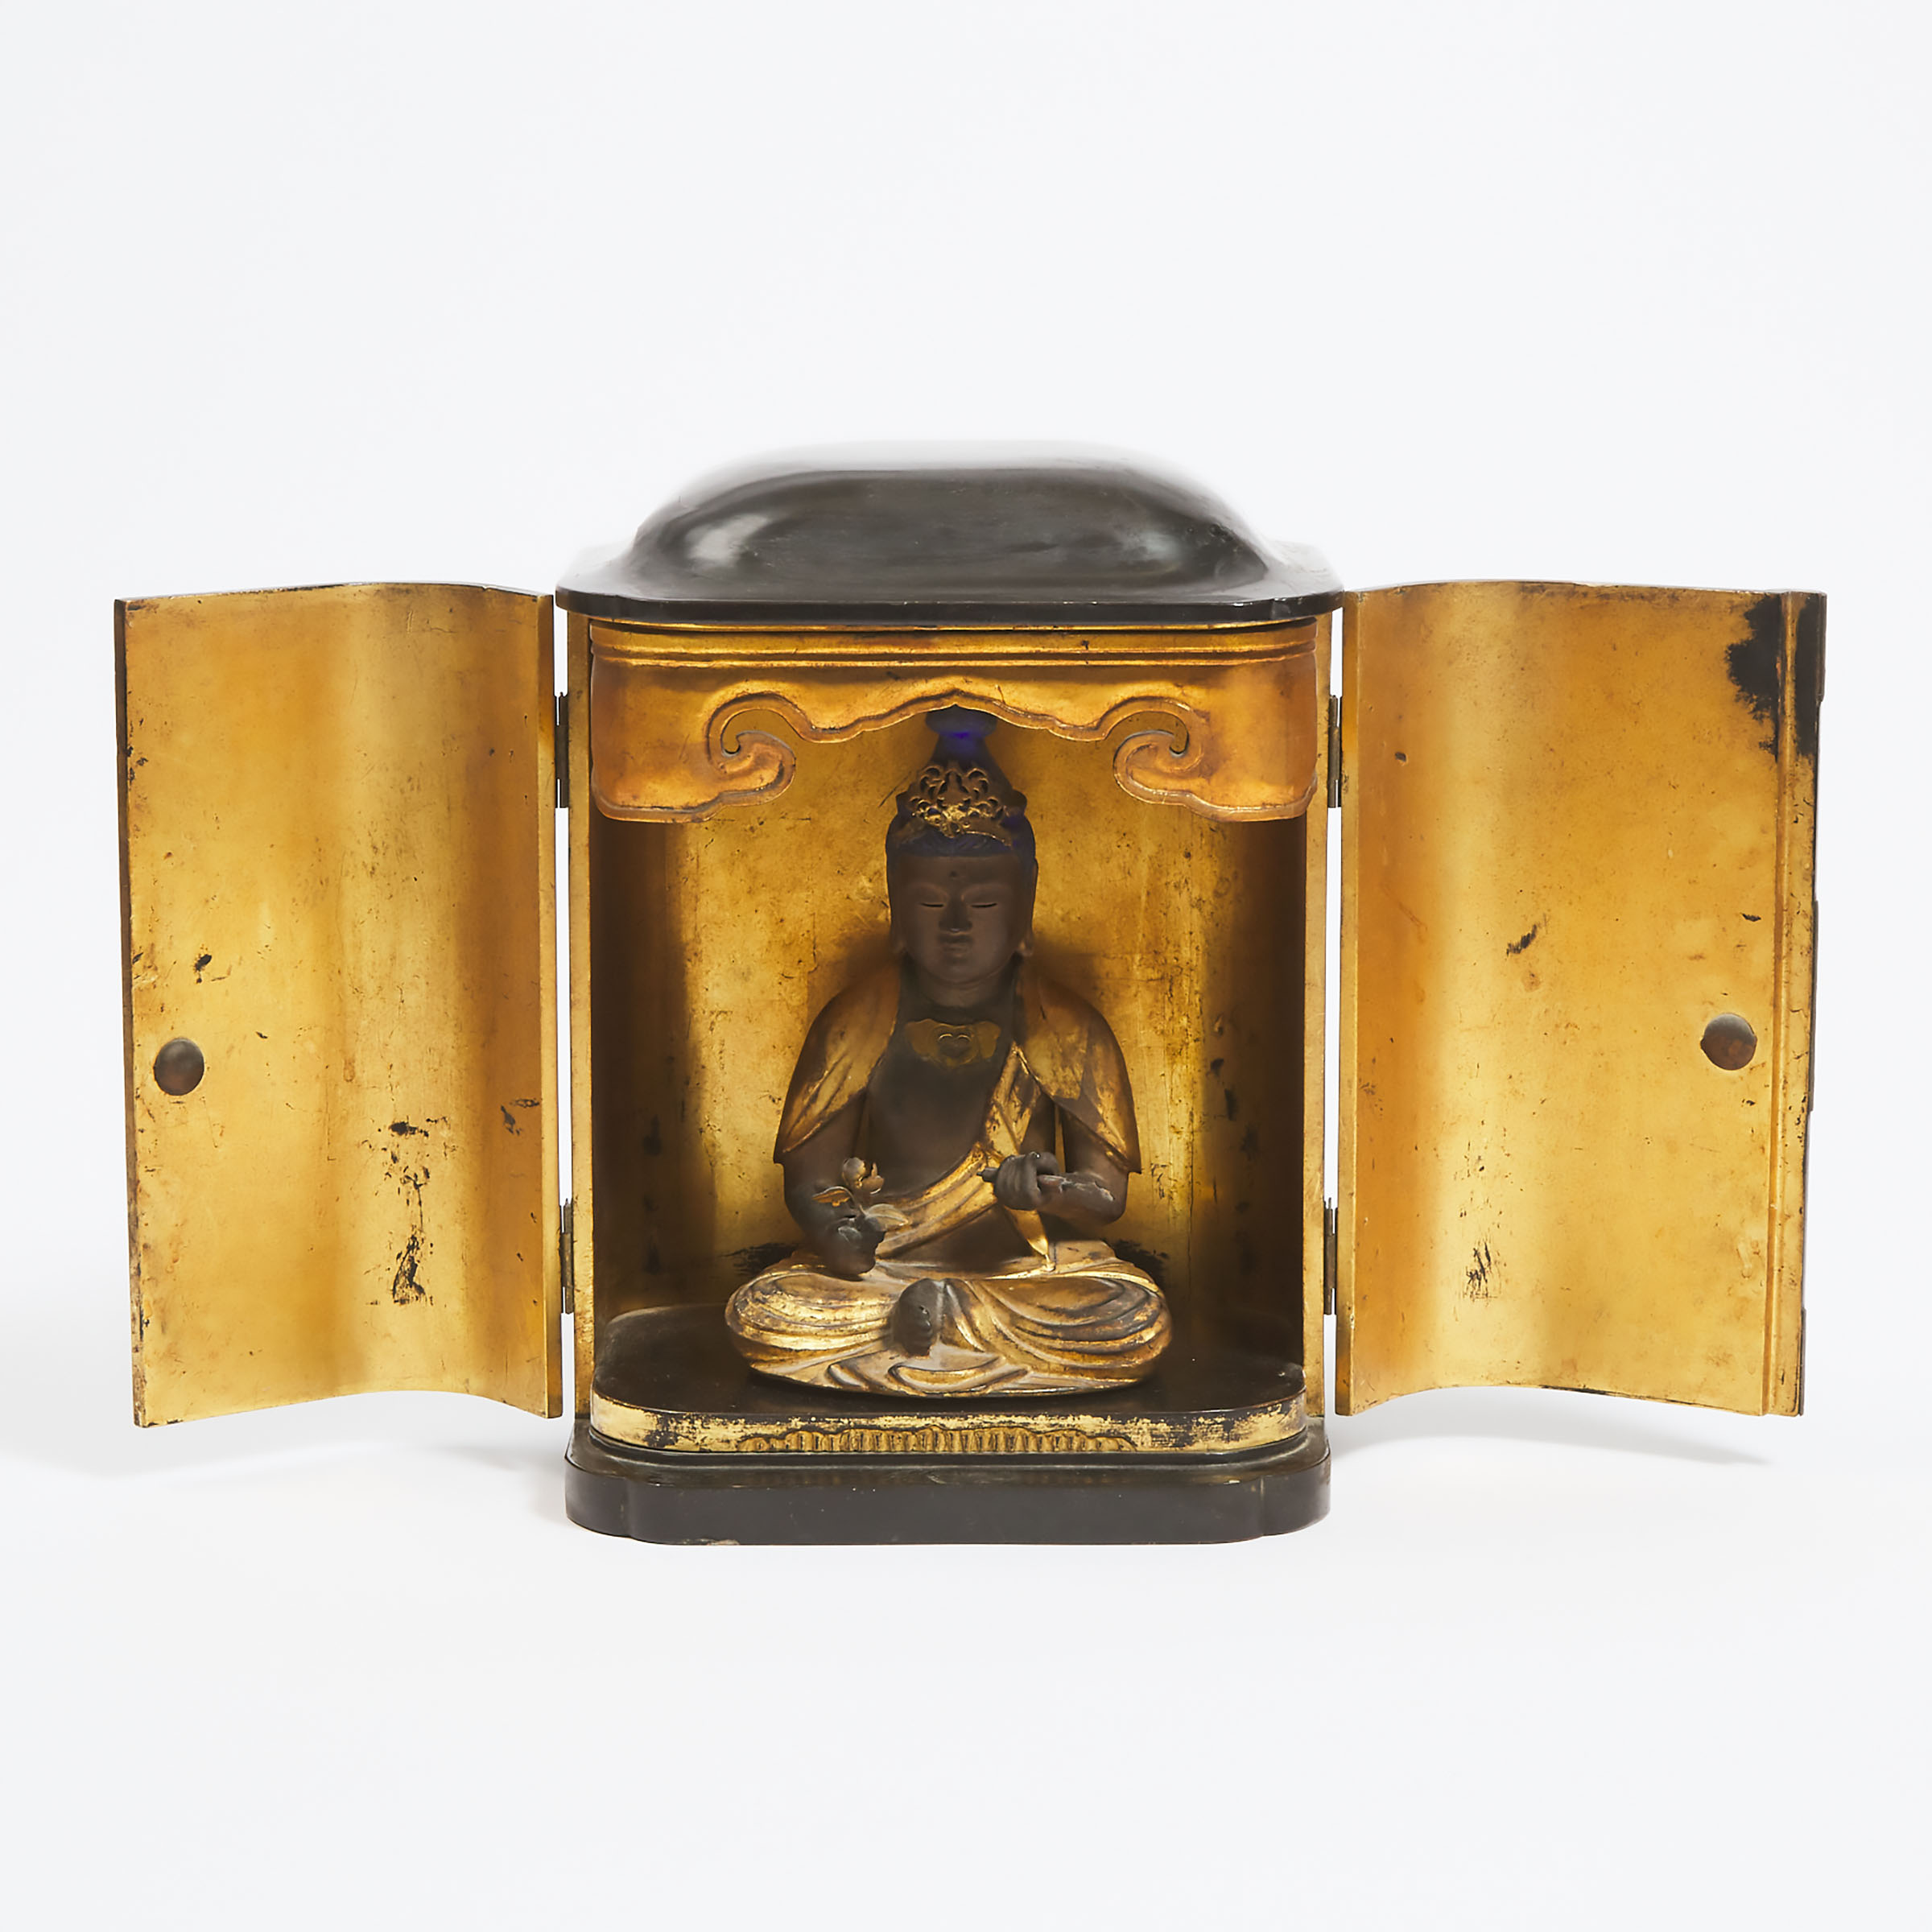 A Portable Shrine (Zushi) With a Gilt Wood Figure of Kannon (Avalokiteshvara), Edo/Meiji Period, 18th/19th Century